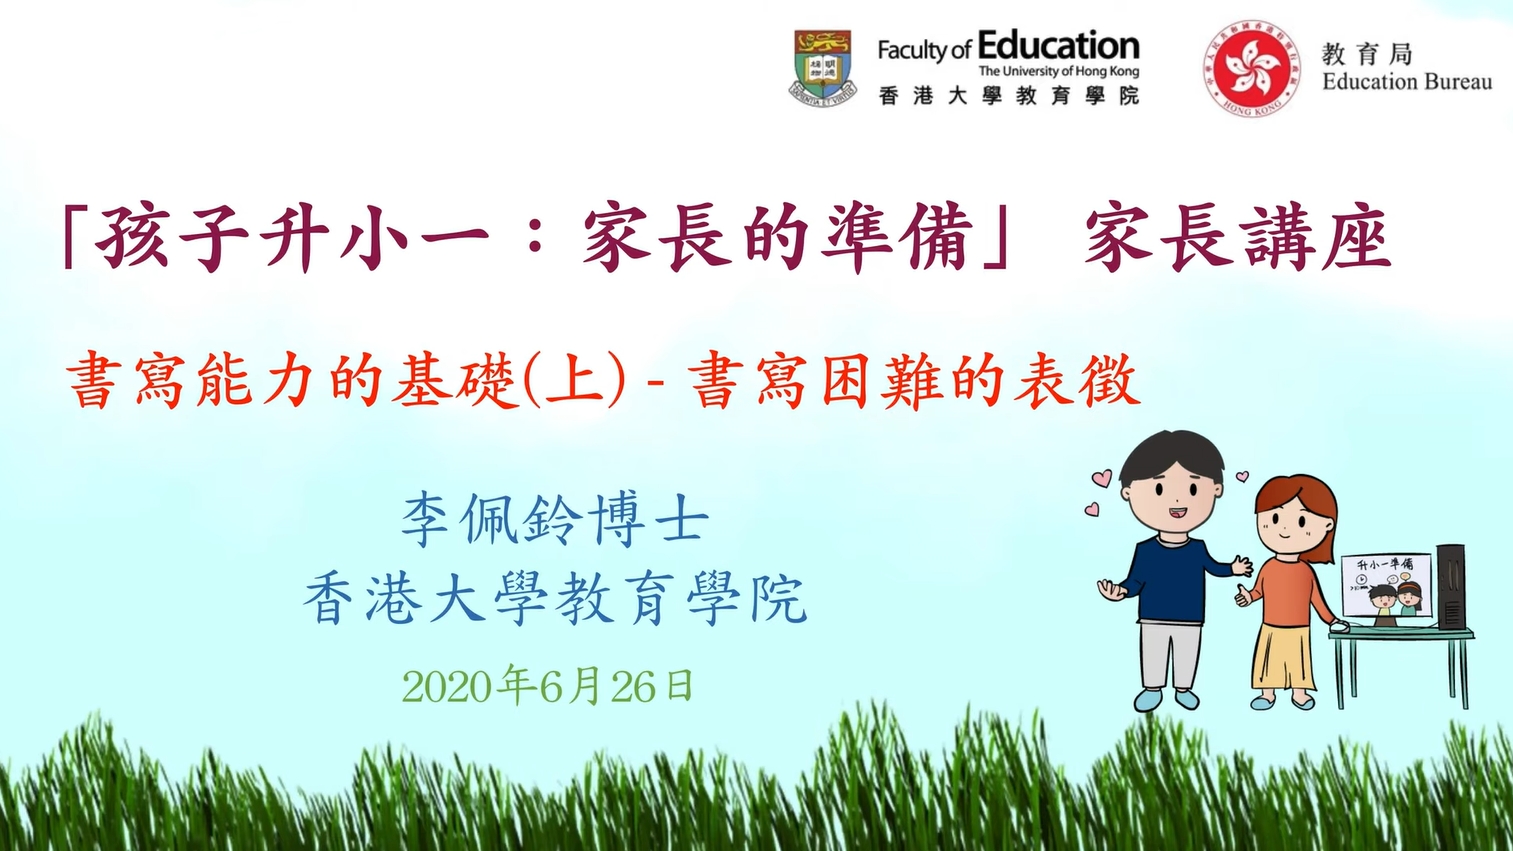 – Education Seminar: School Transition – Parent’s preparation